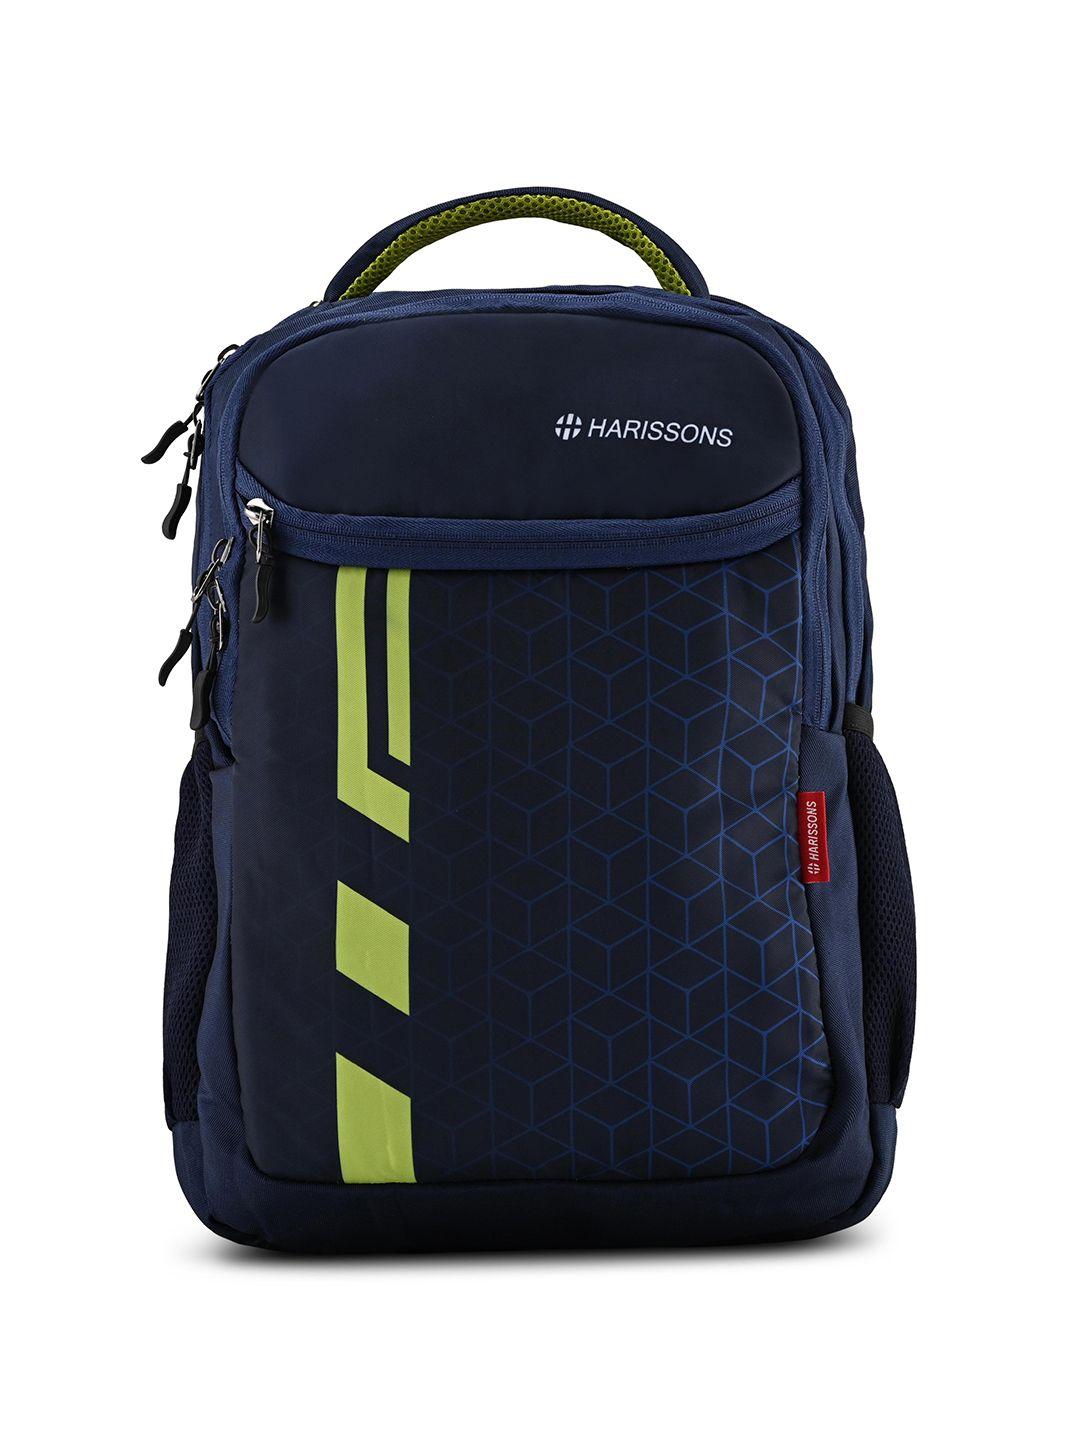 harissons unisex navy blue & green backpack